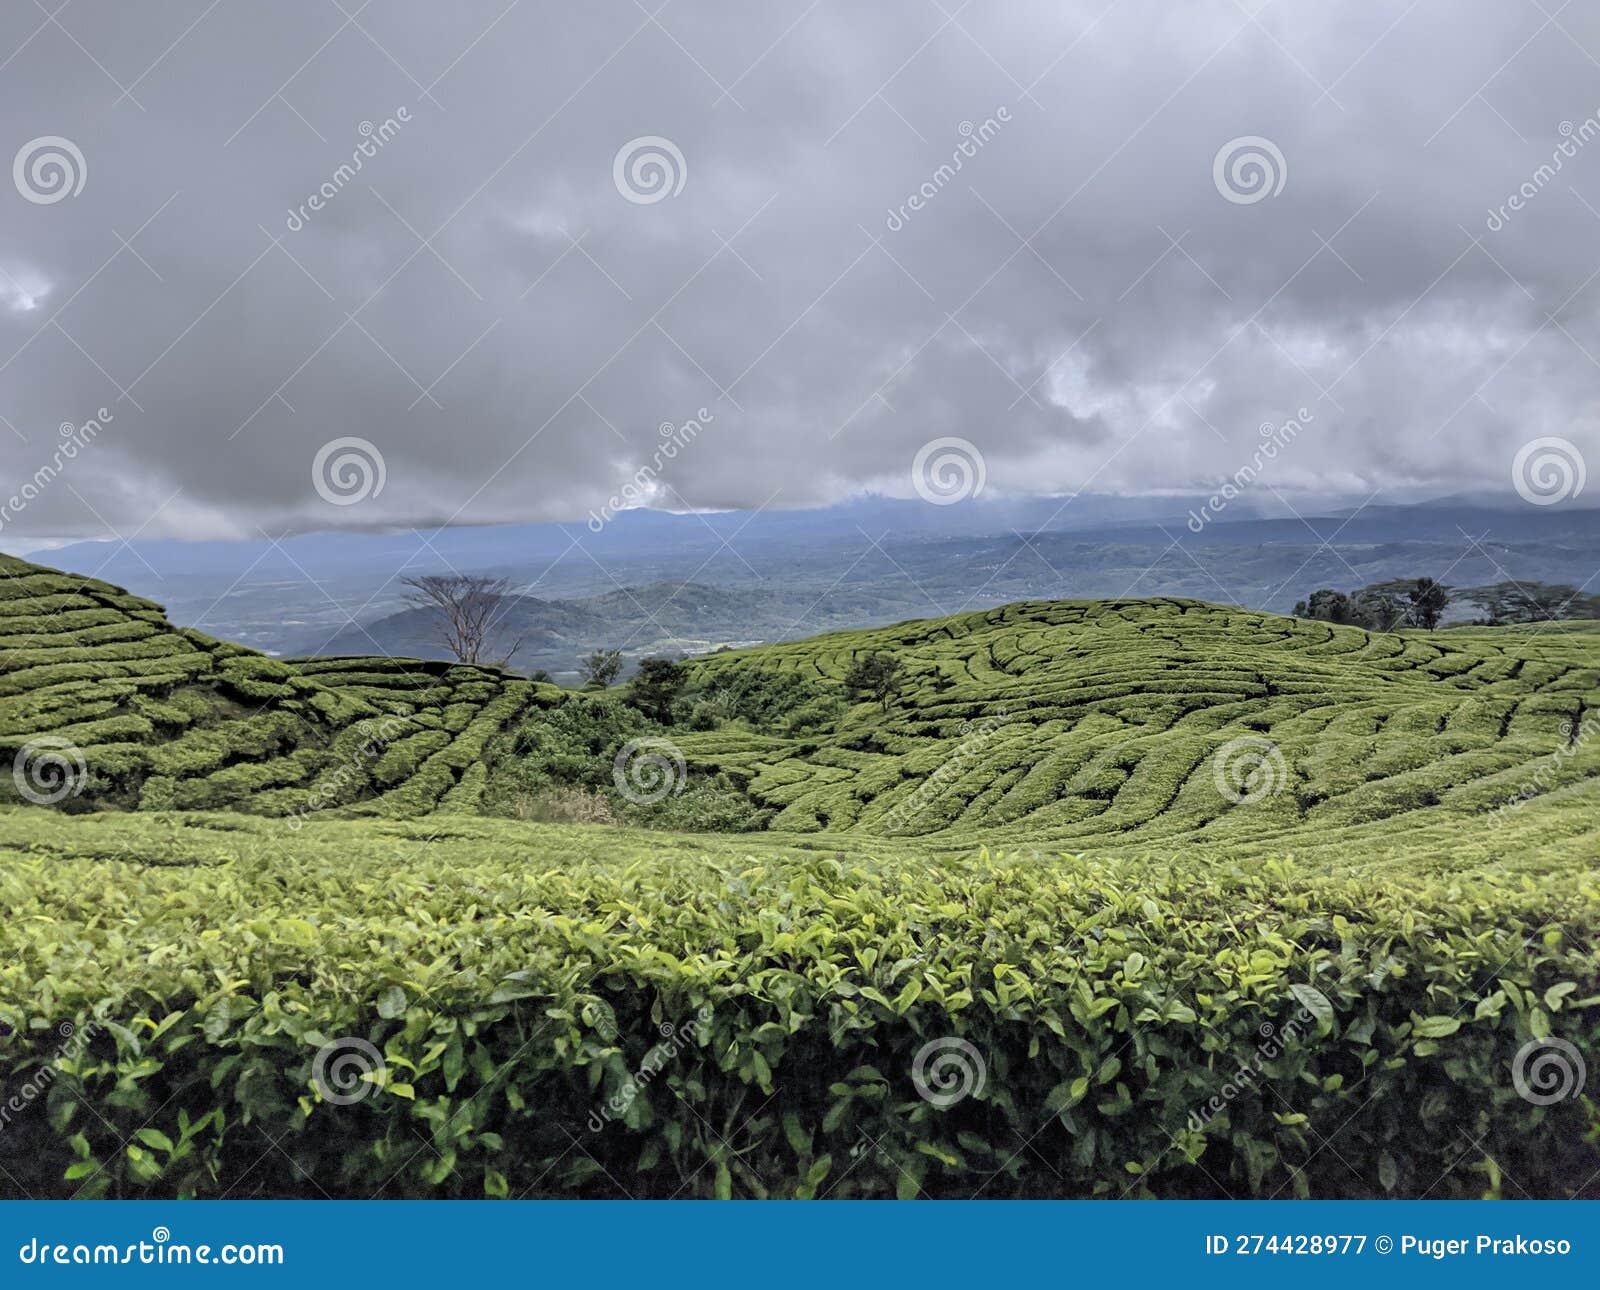 overview of tea gardens pagar alam south sumatera